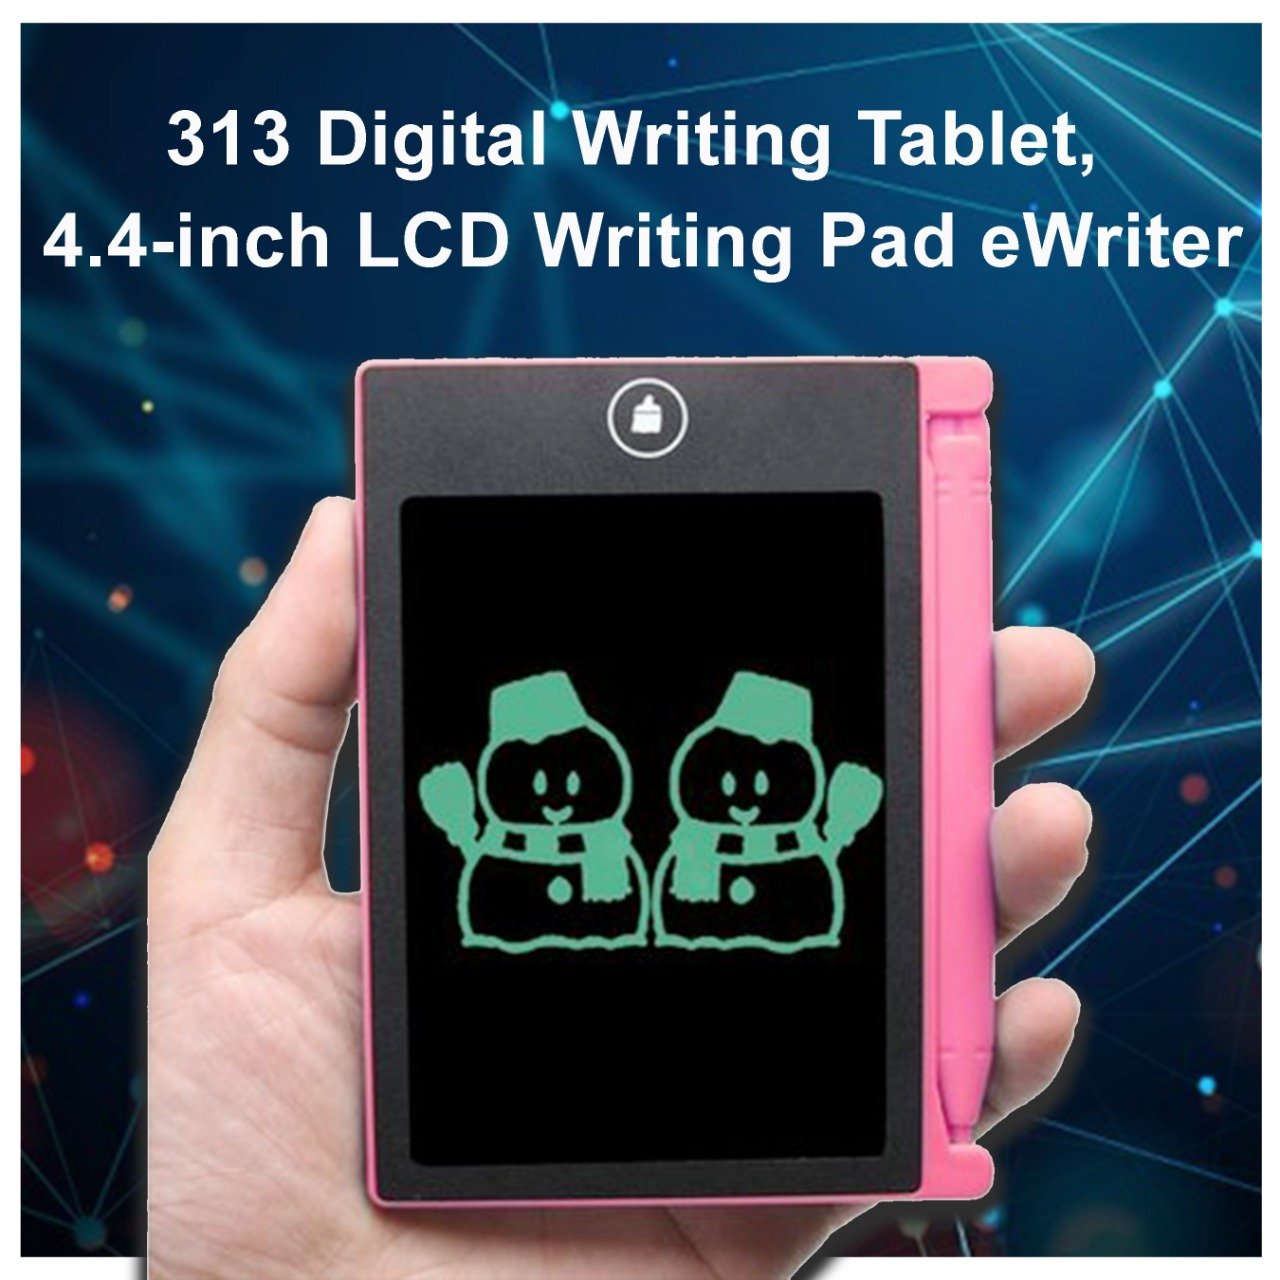 0313 Digital Writing Tablet, 4.4-inch LCD Writing Pad eWriter (No return policy) - SkyShopy